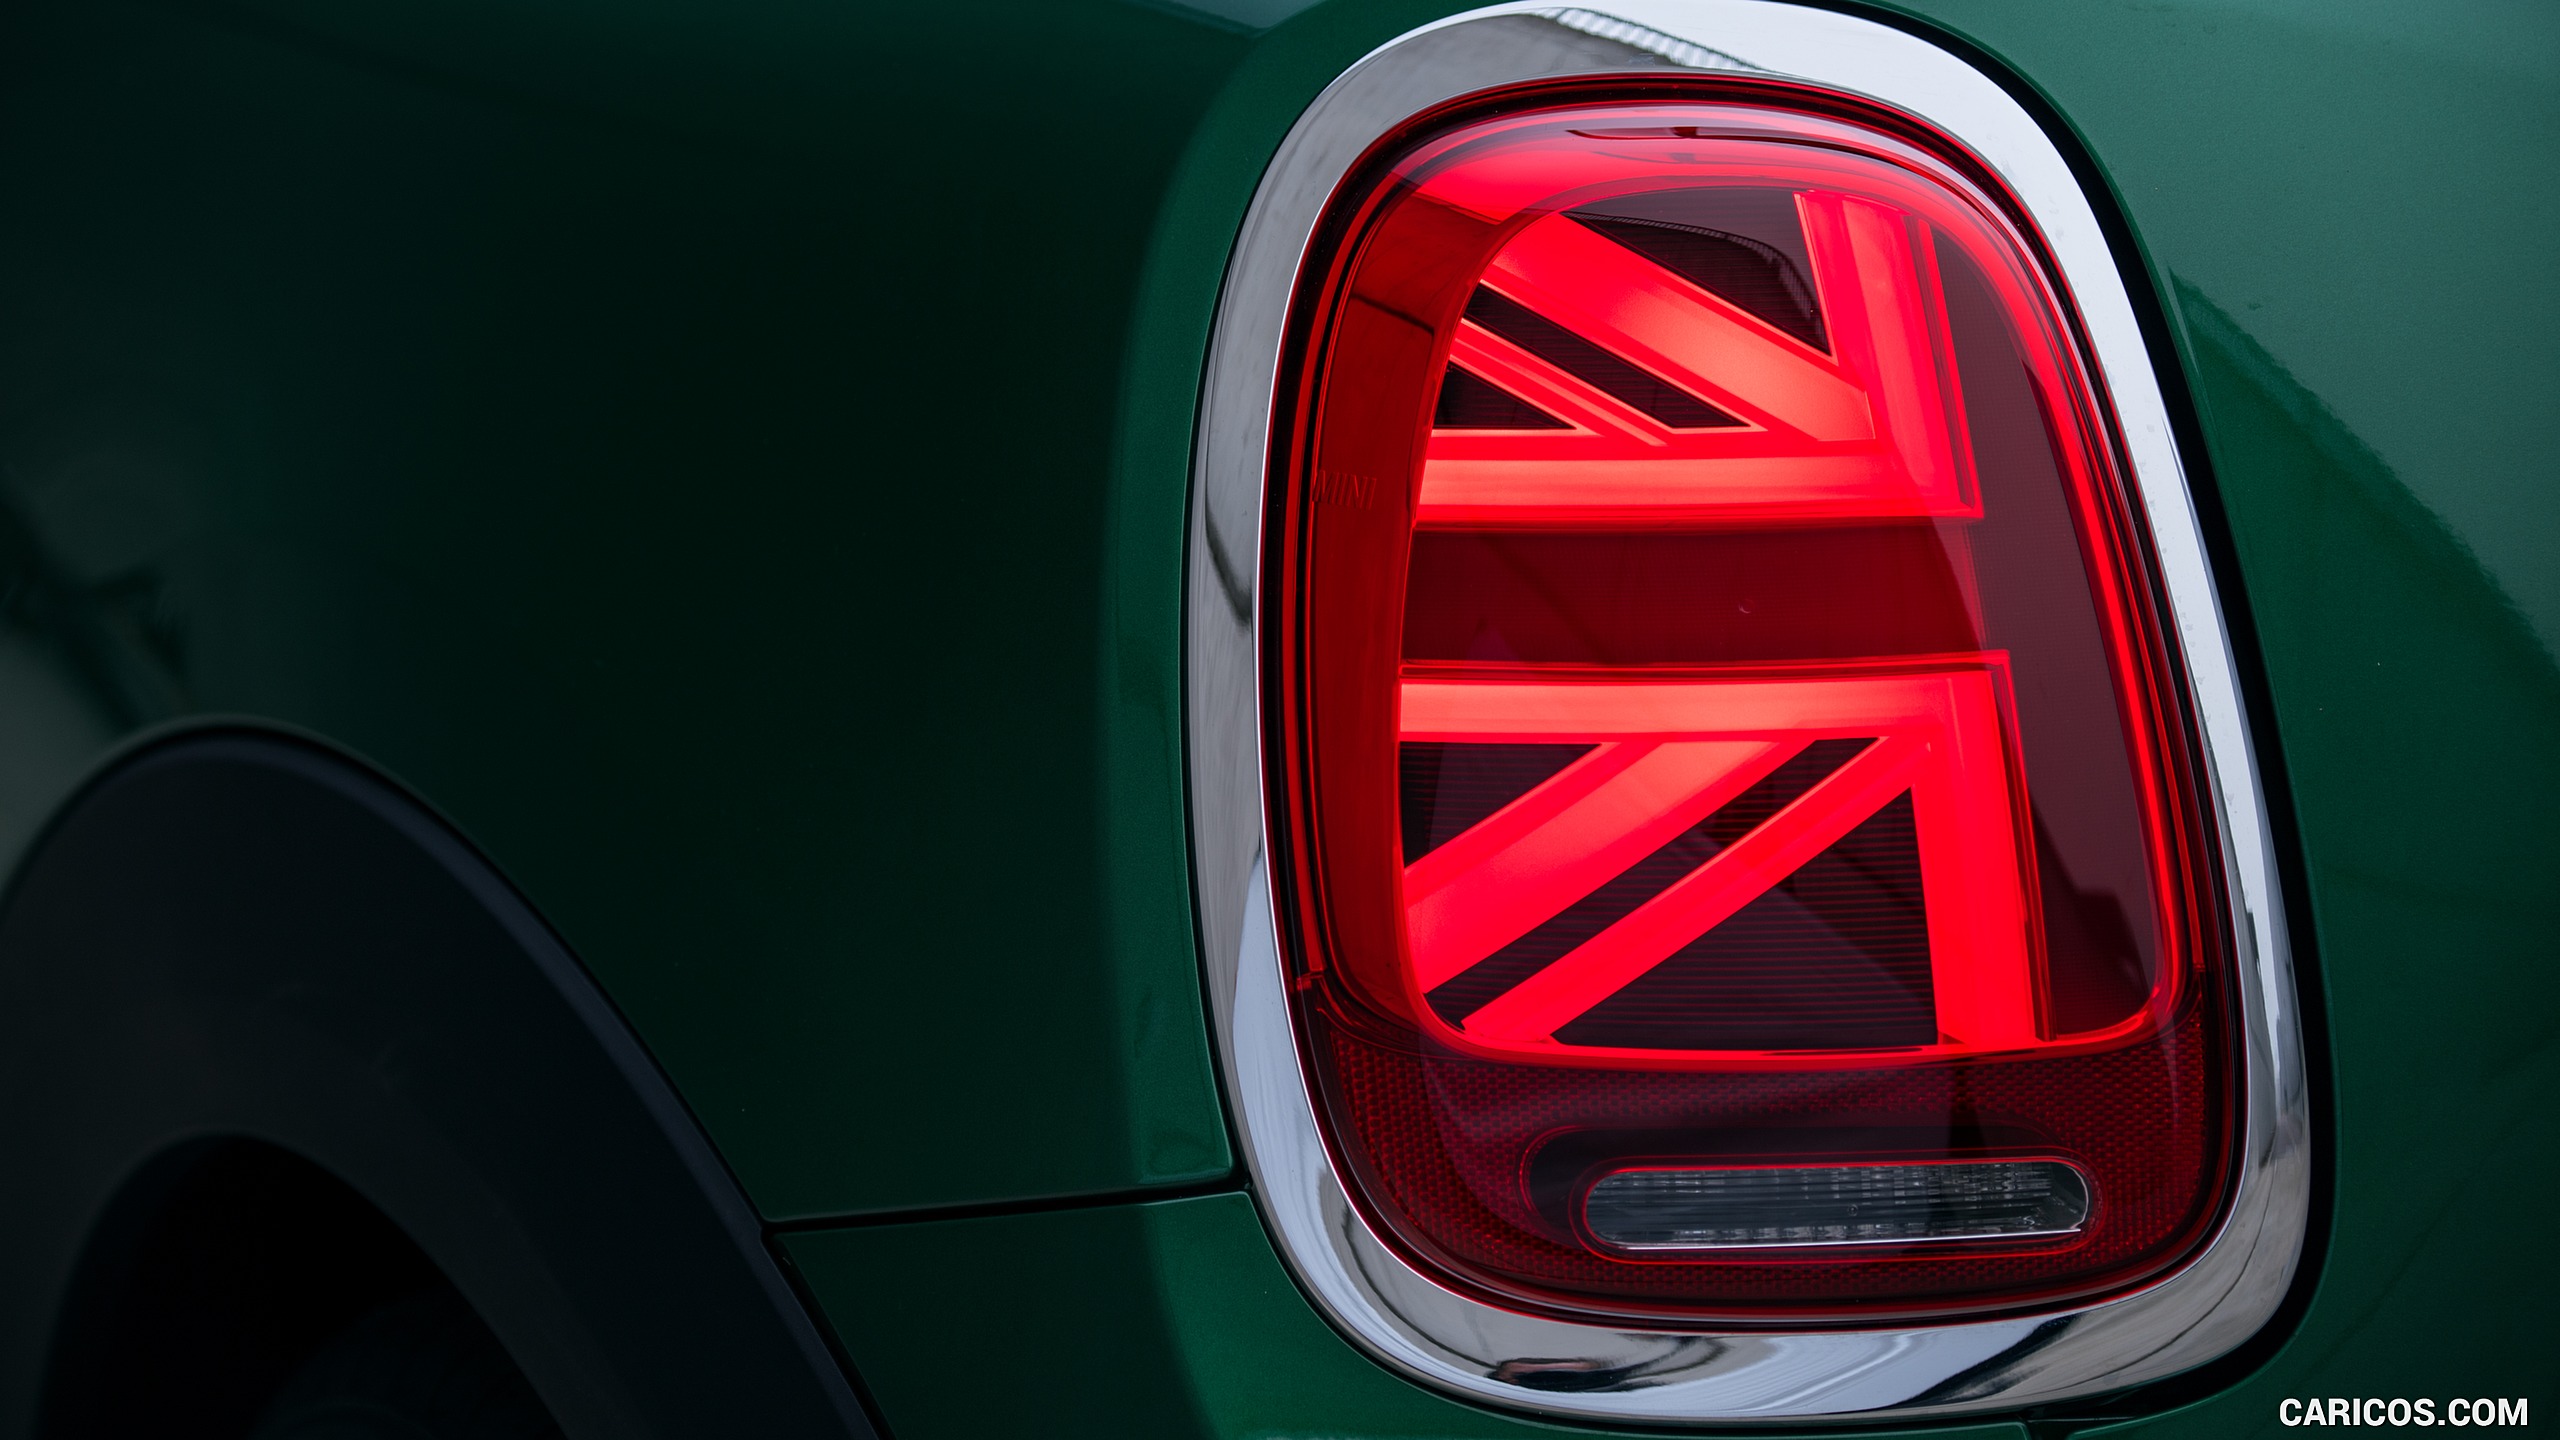 2019 MINI Cooper 3-Door 60 Years Edition - Tail Light, #68 of 102